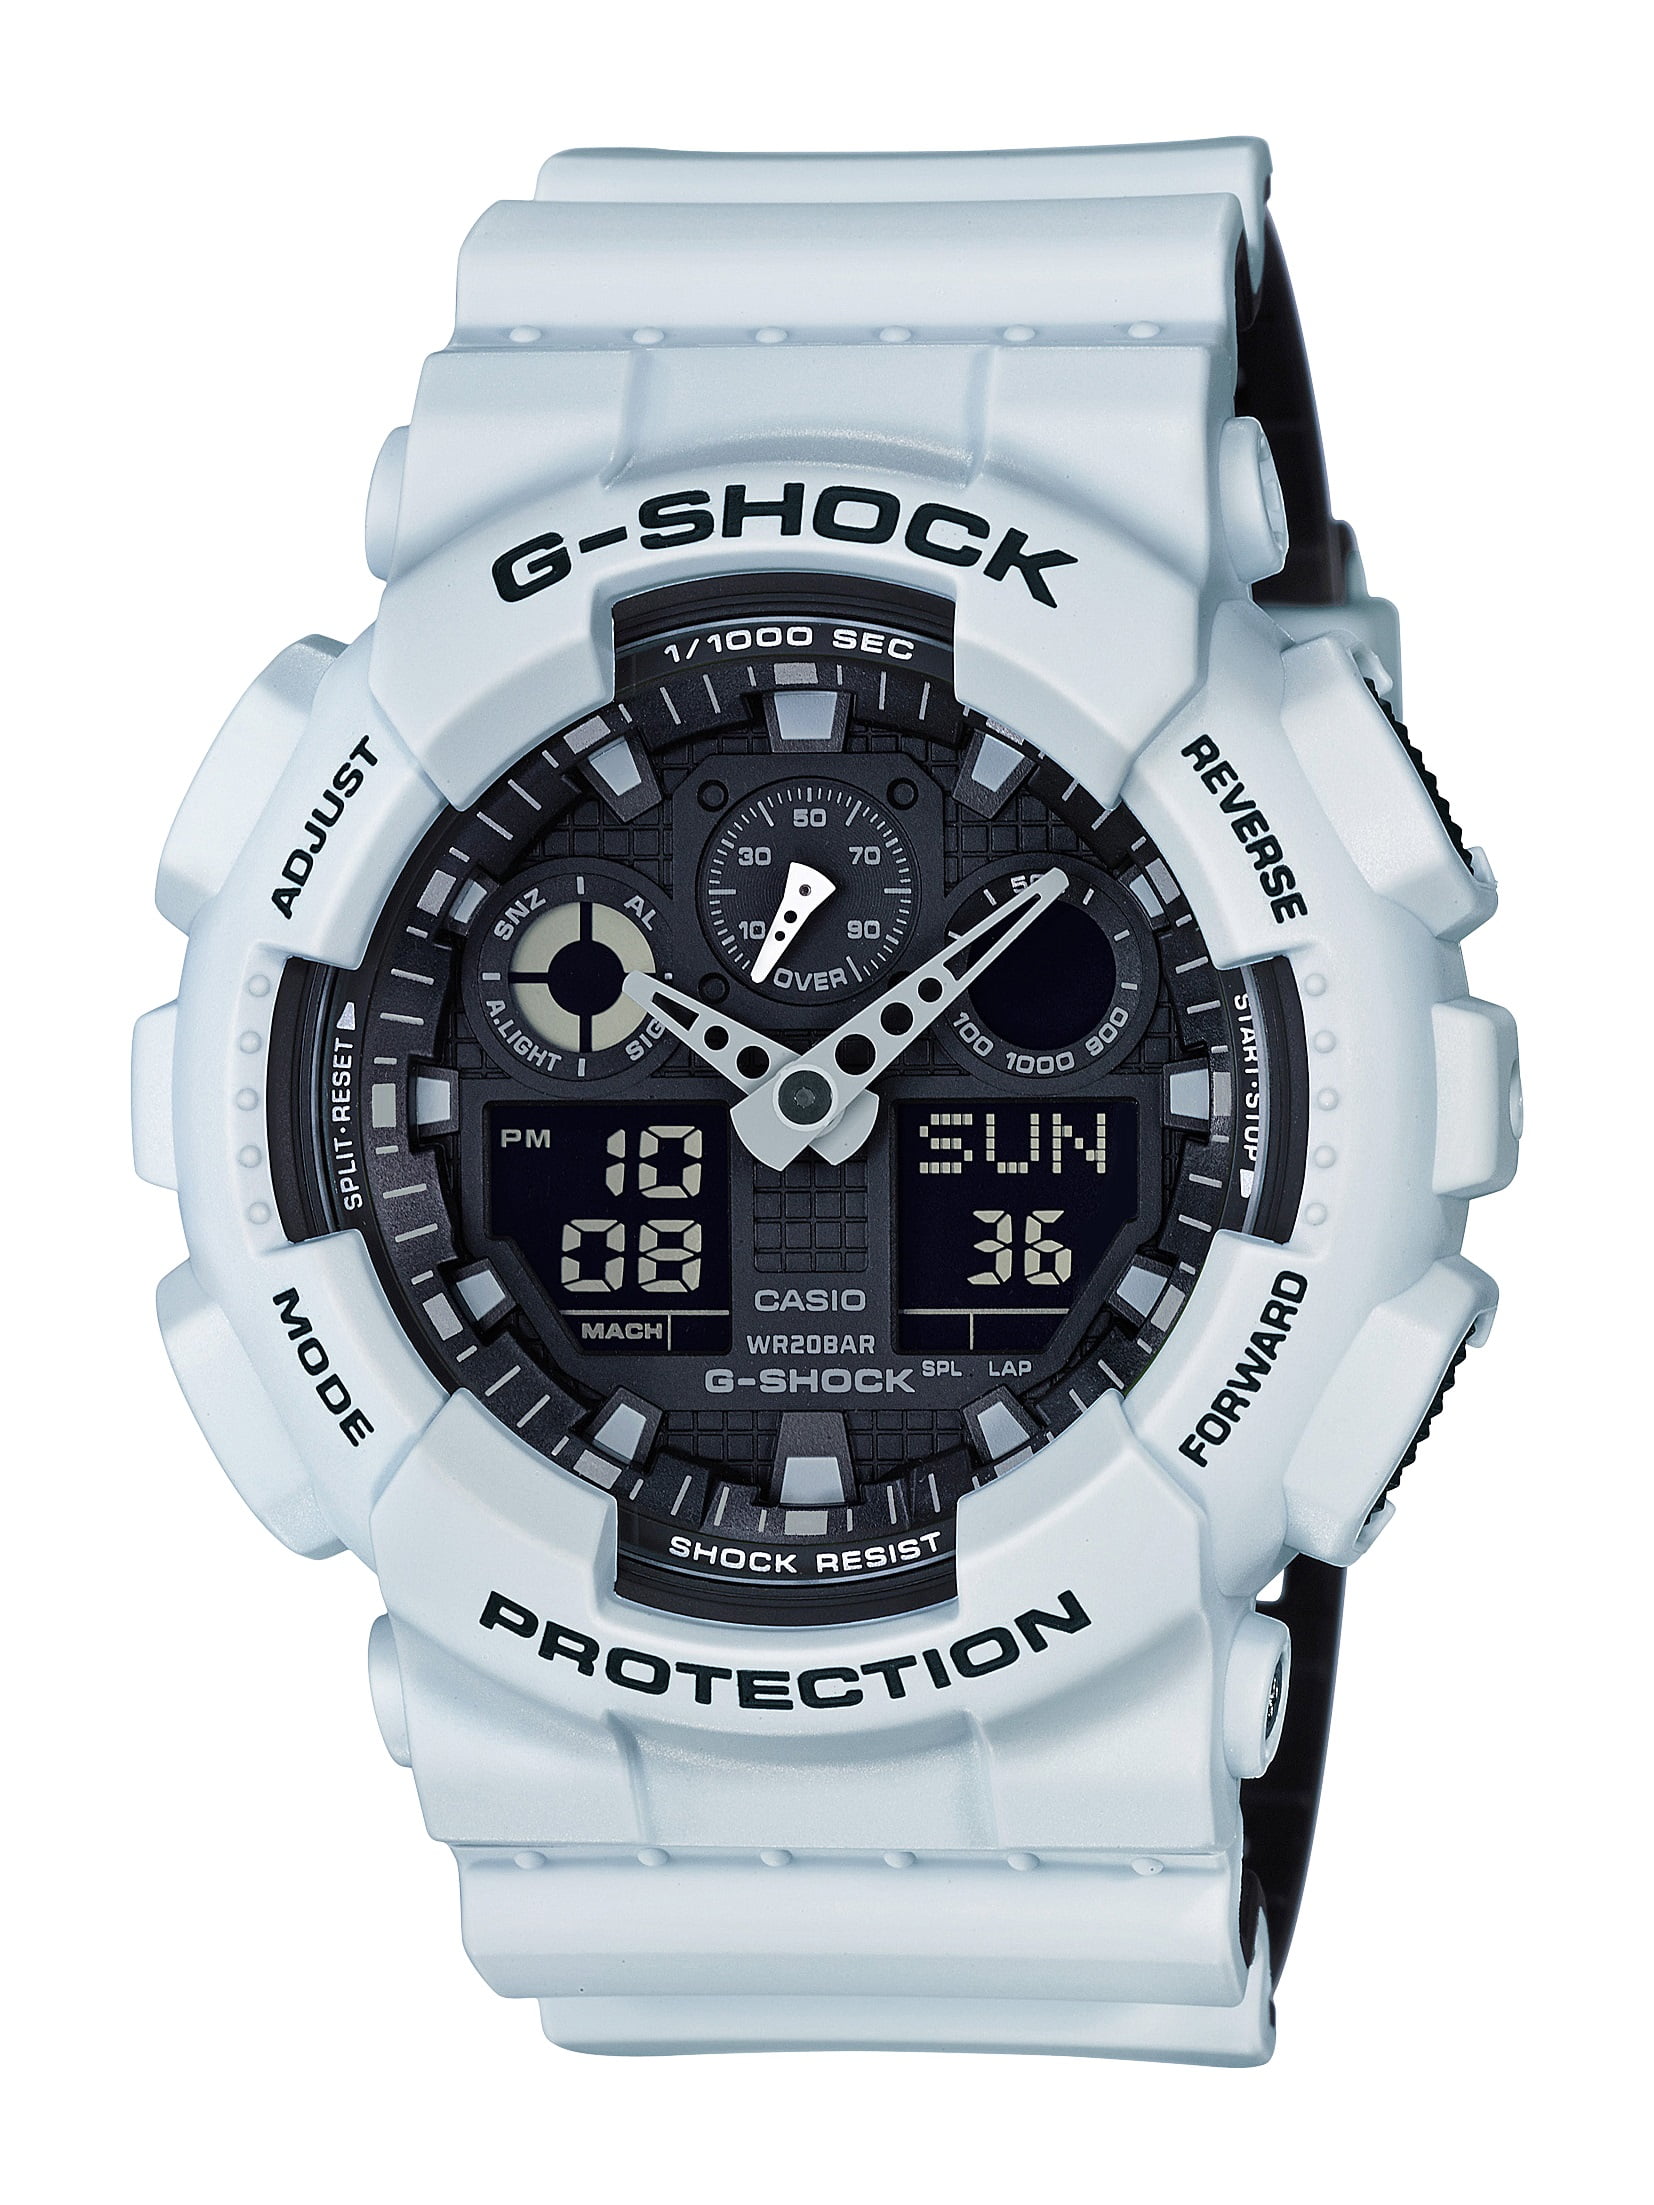 G Shock White Watch Price | lupon.gov.ph